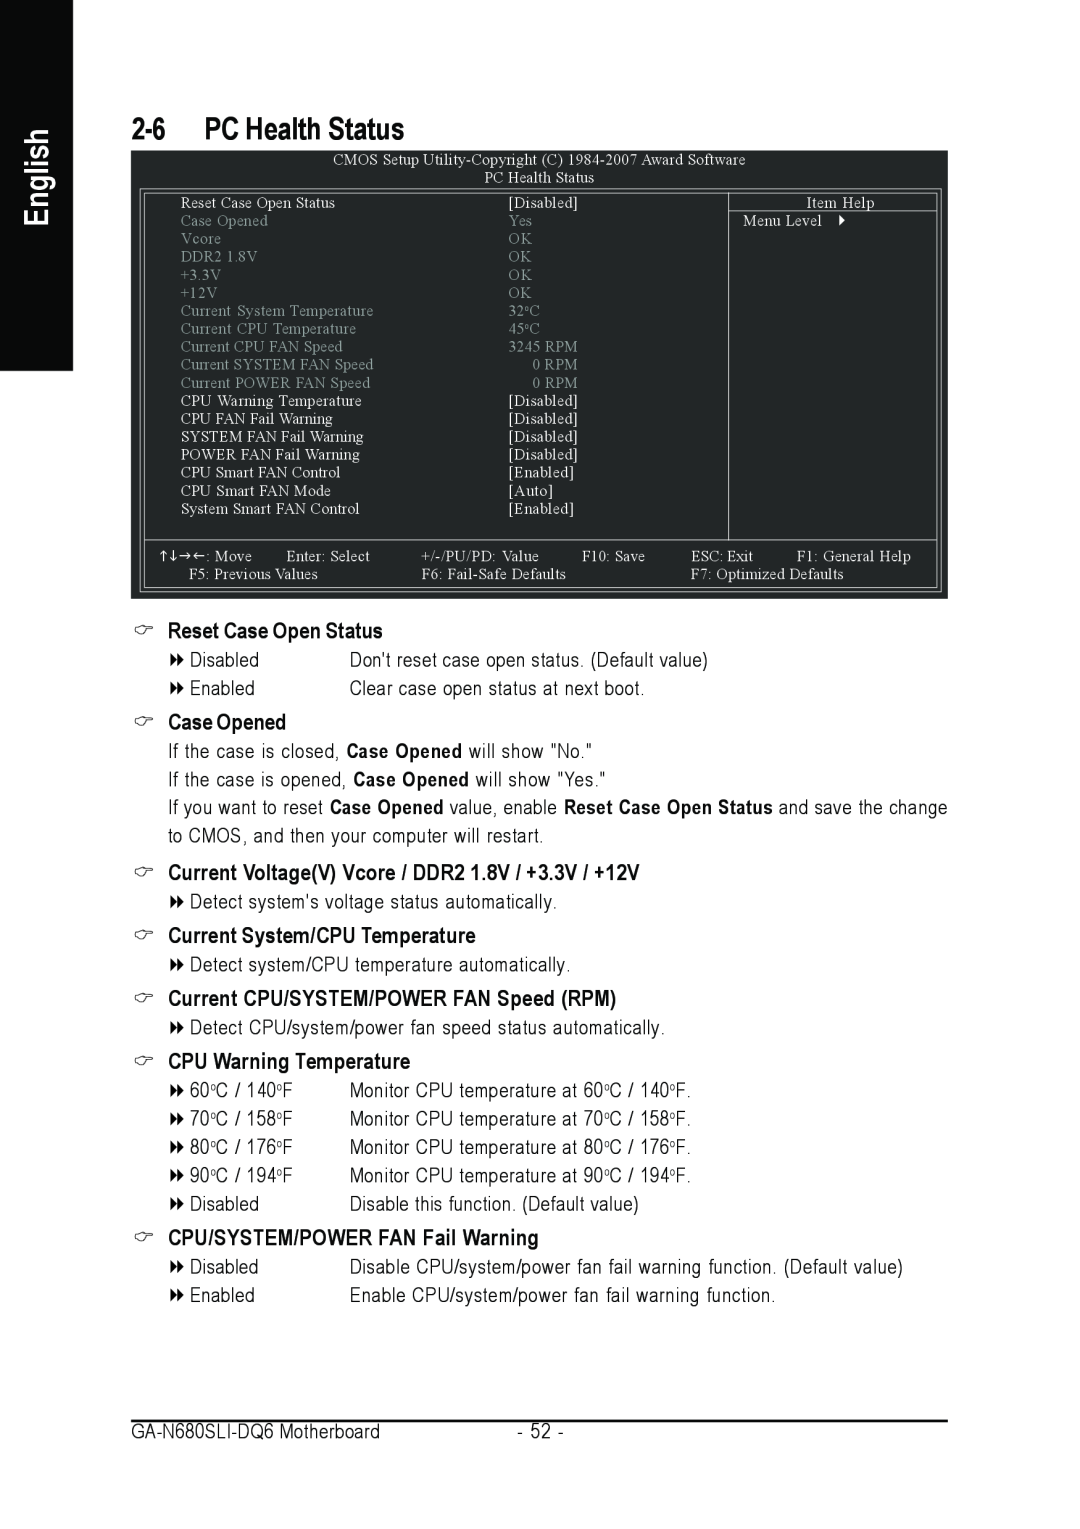 Intel GA-N680SLI-DQ6 user manual PC Health Status, Case Opened, Current VoltageV Vcore / DDR2 1.8V / +3.3V / +12V, English 